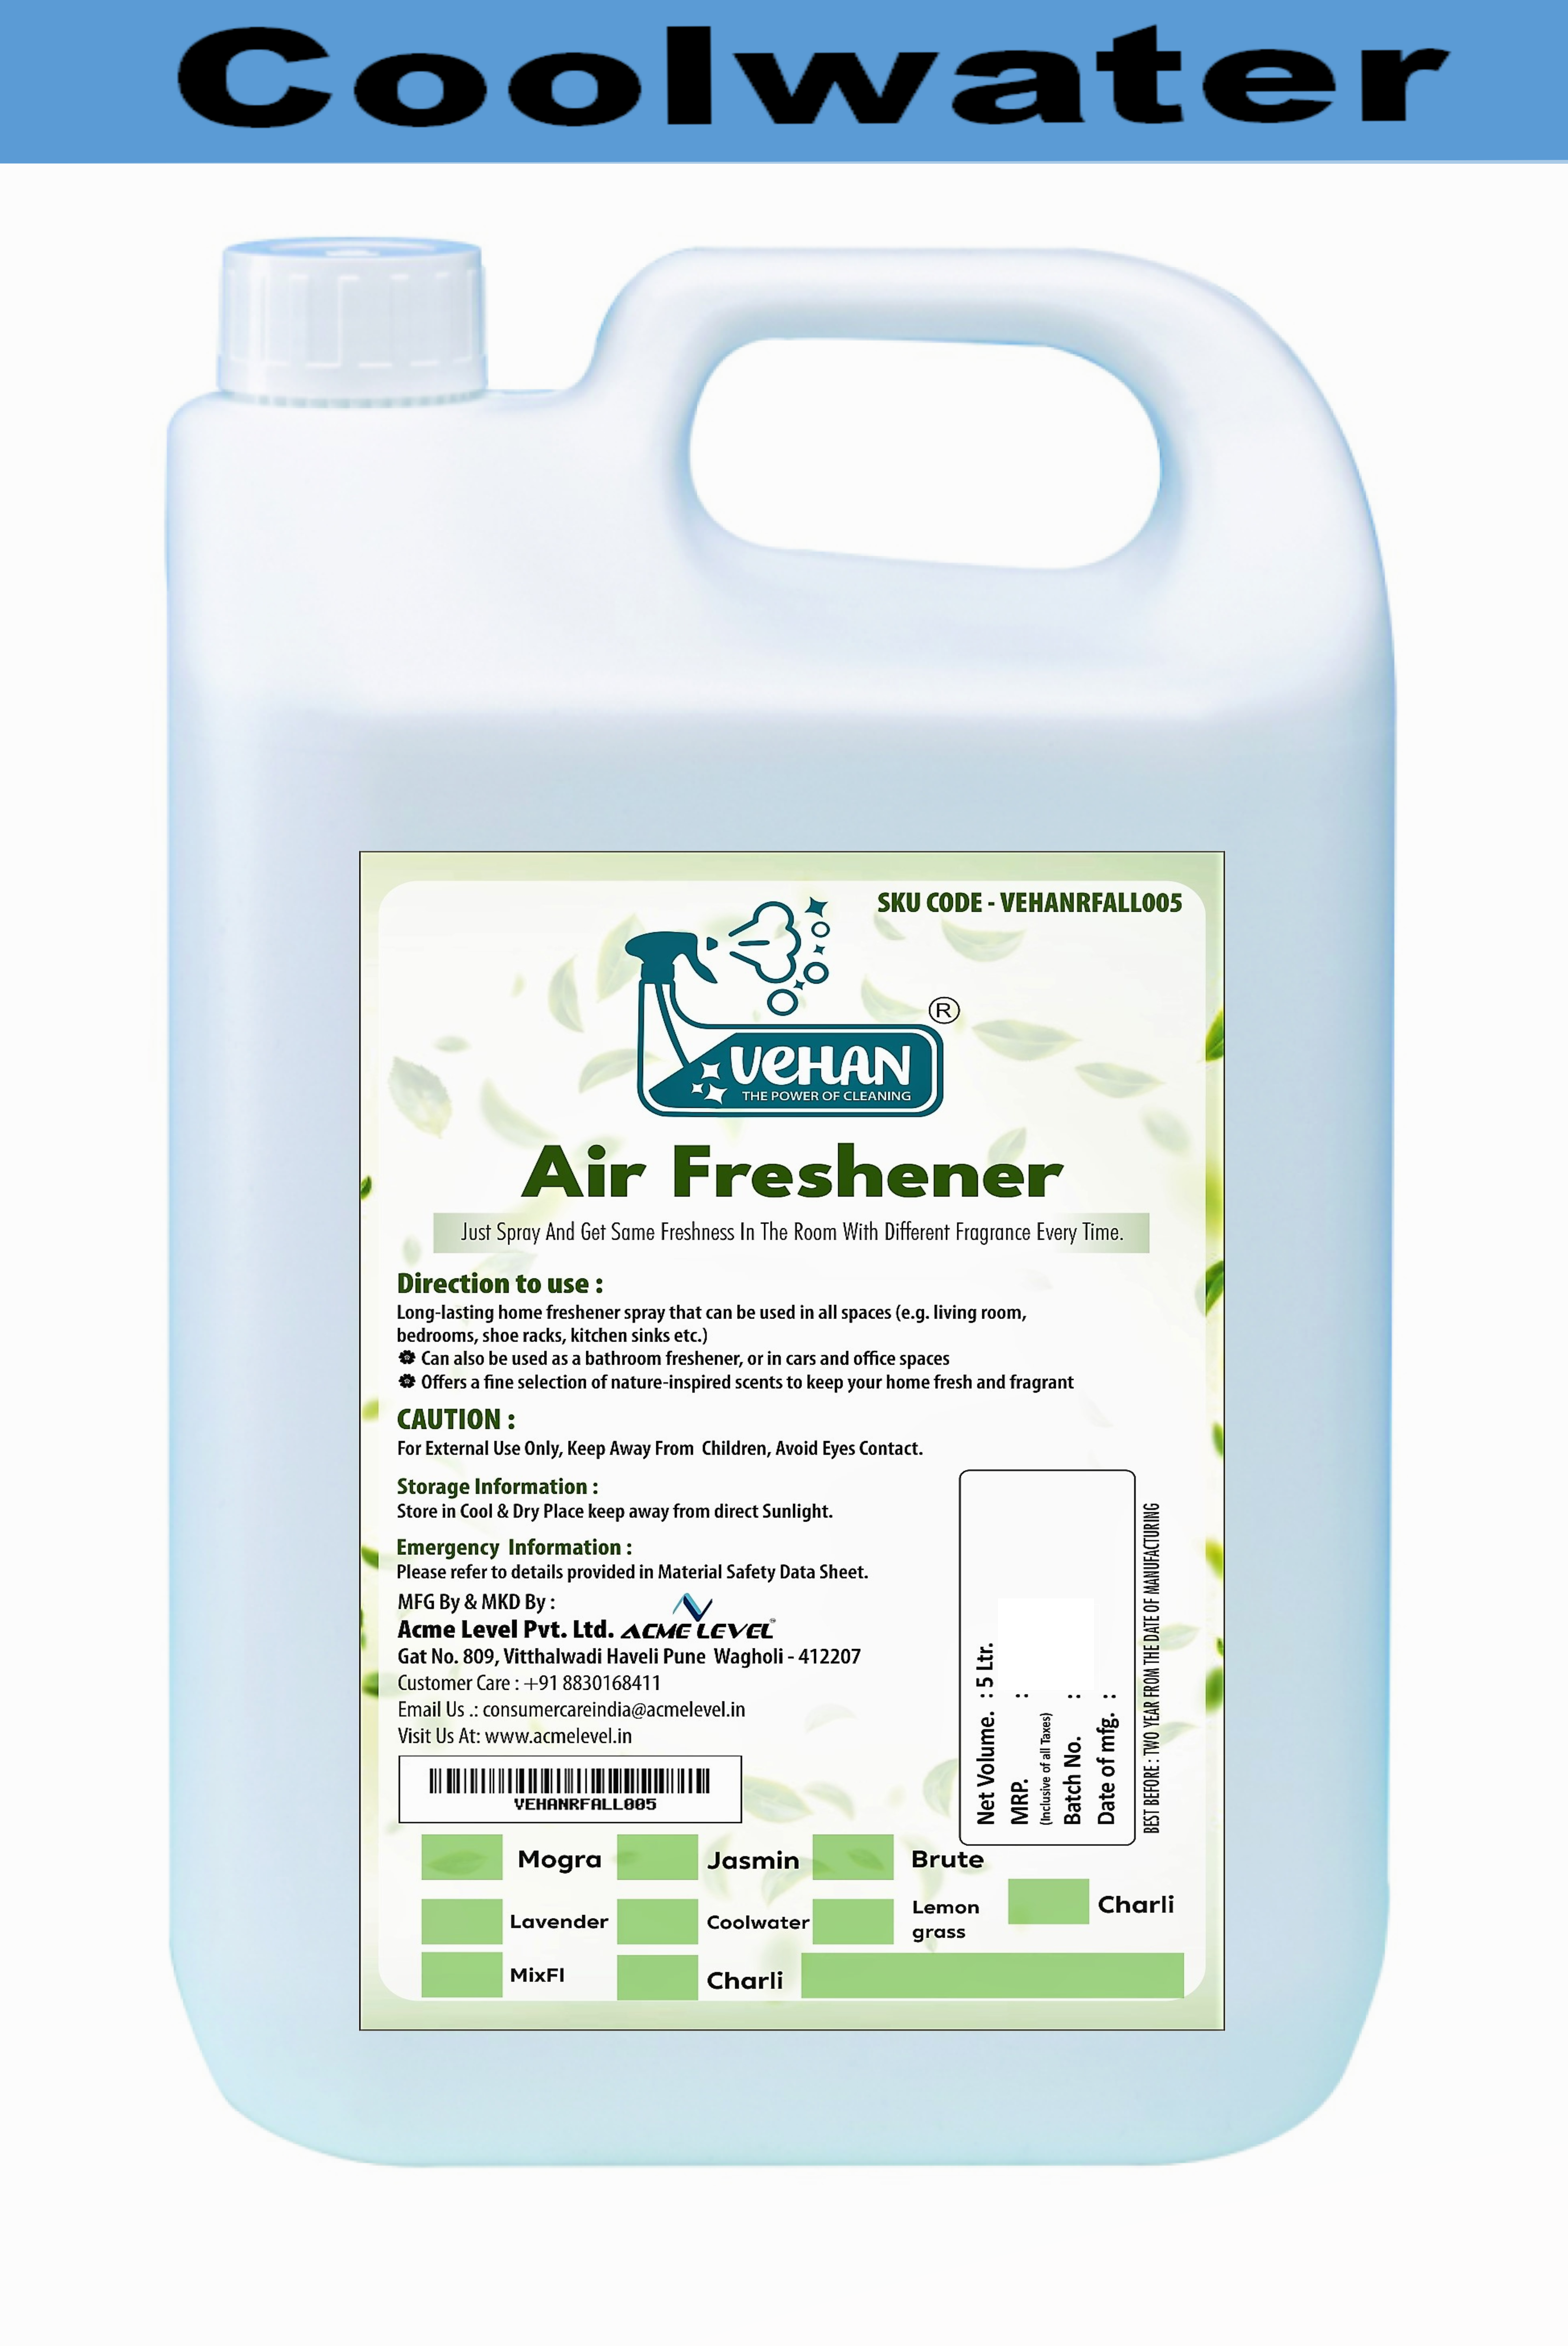 Room Freshener (Coolwater)